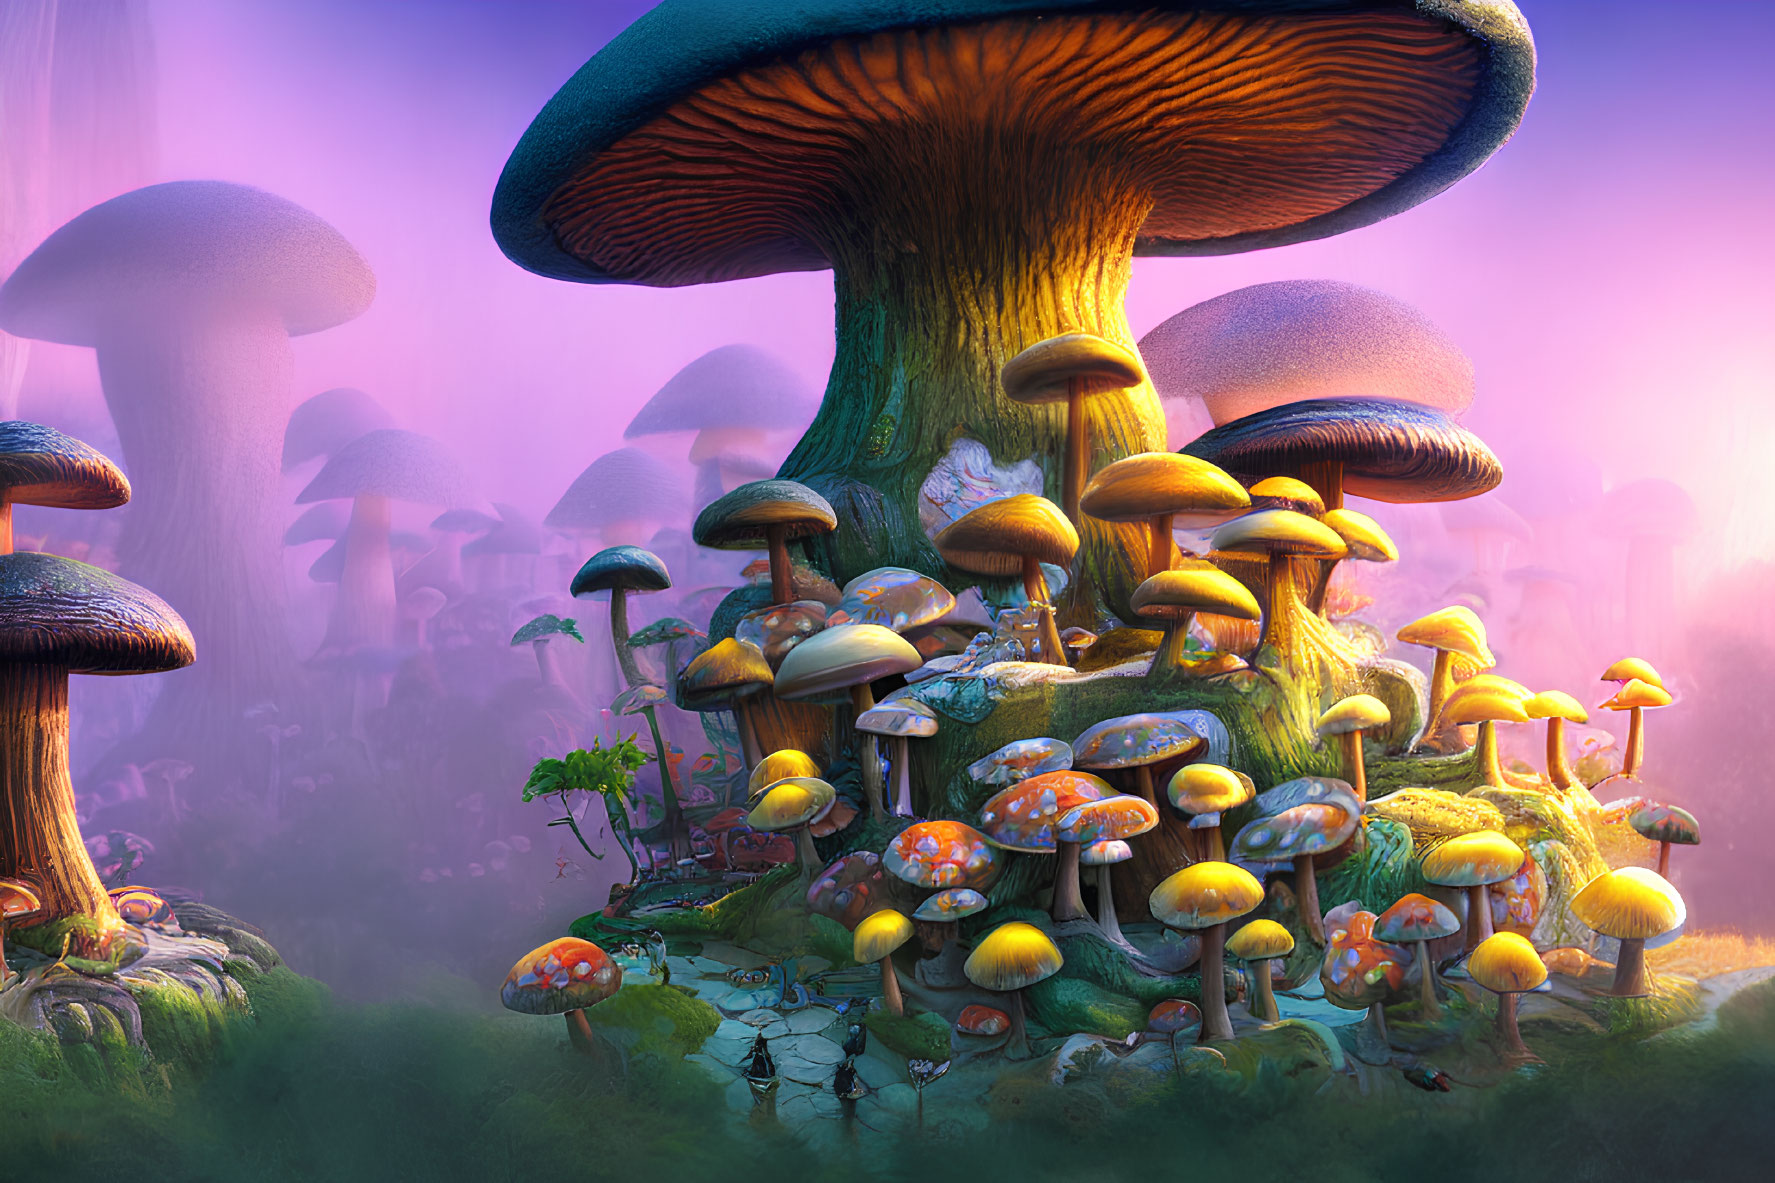 Colorful oversized mushroom forest in mystical purple haze